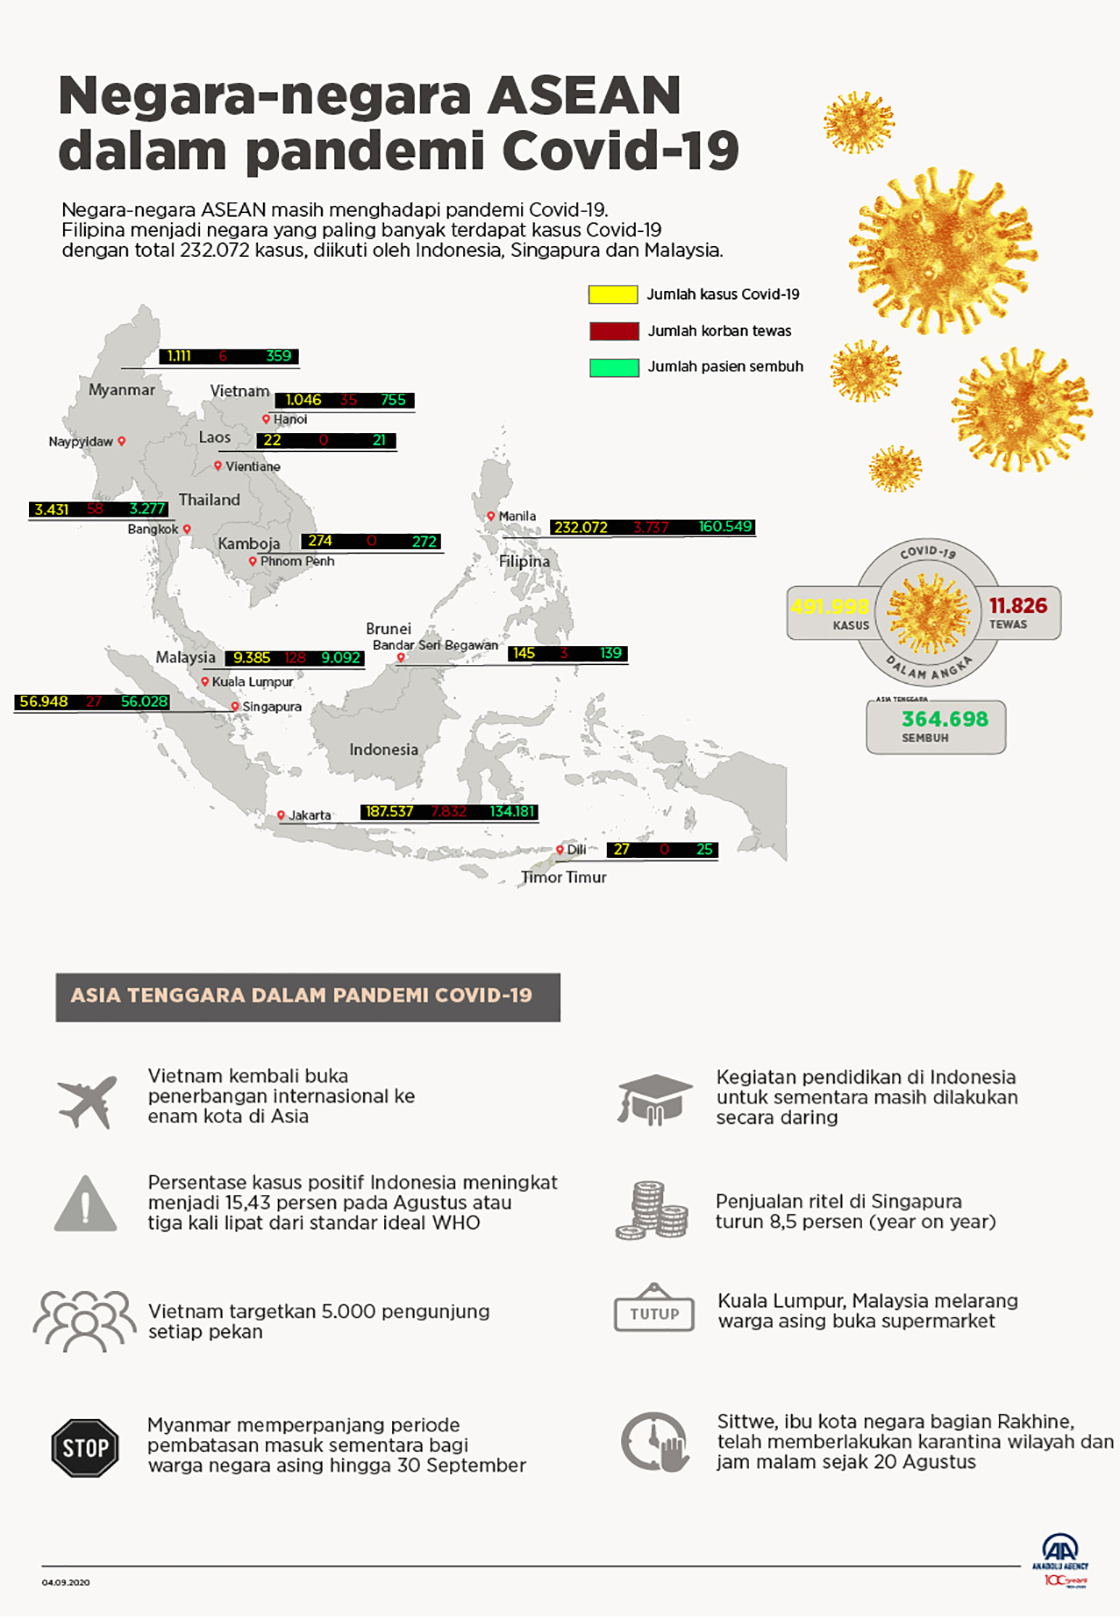 Negara-negara ASEAN dalam pandemi Covid-19 